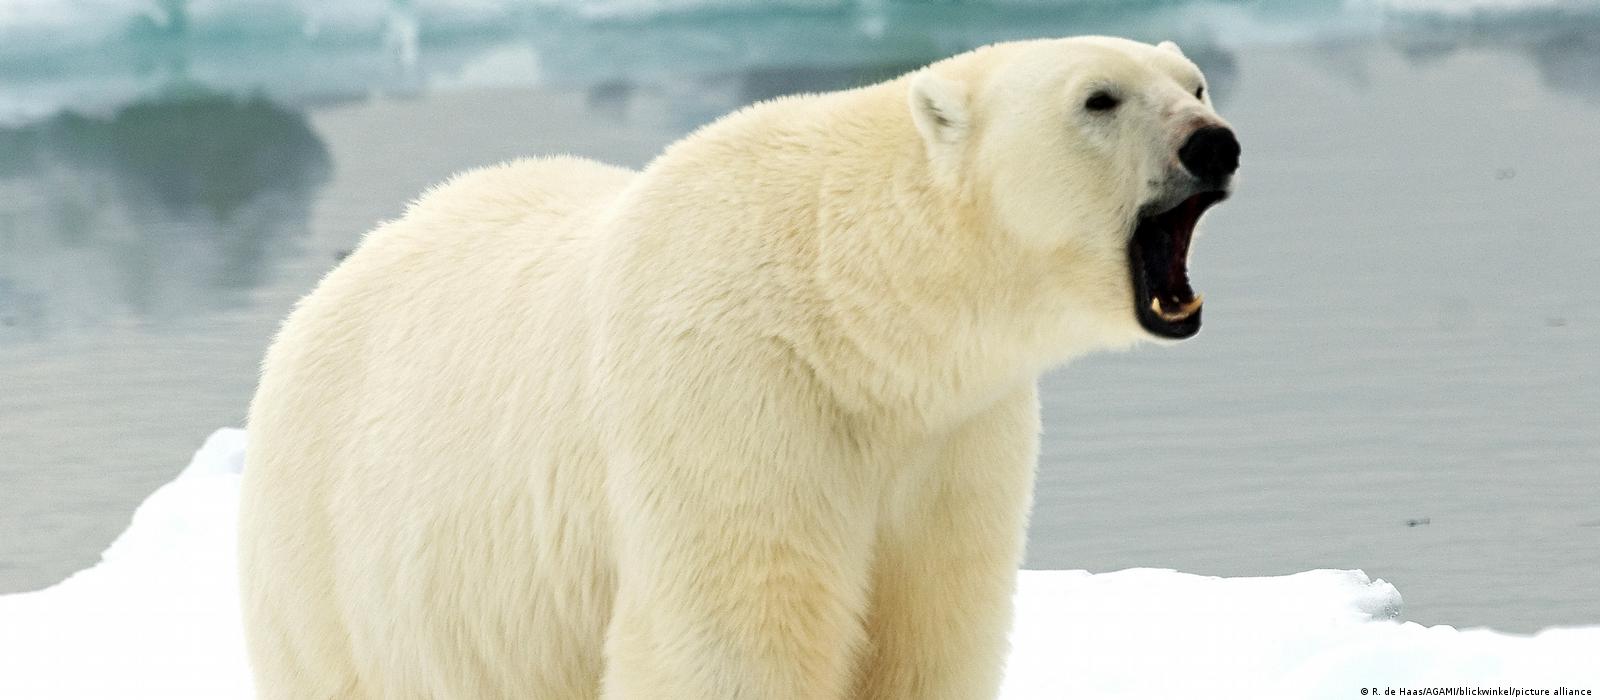 Polar bear killed after hurting tourist – DW – 08/09/2022